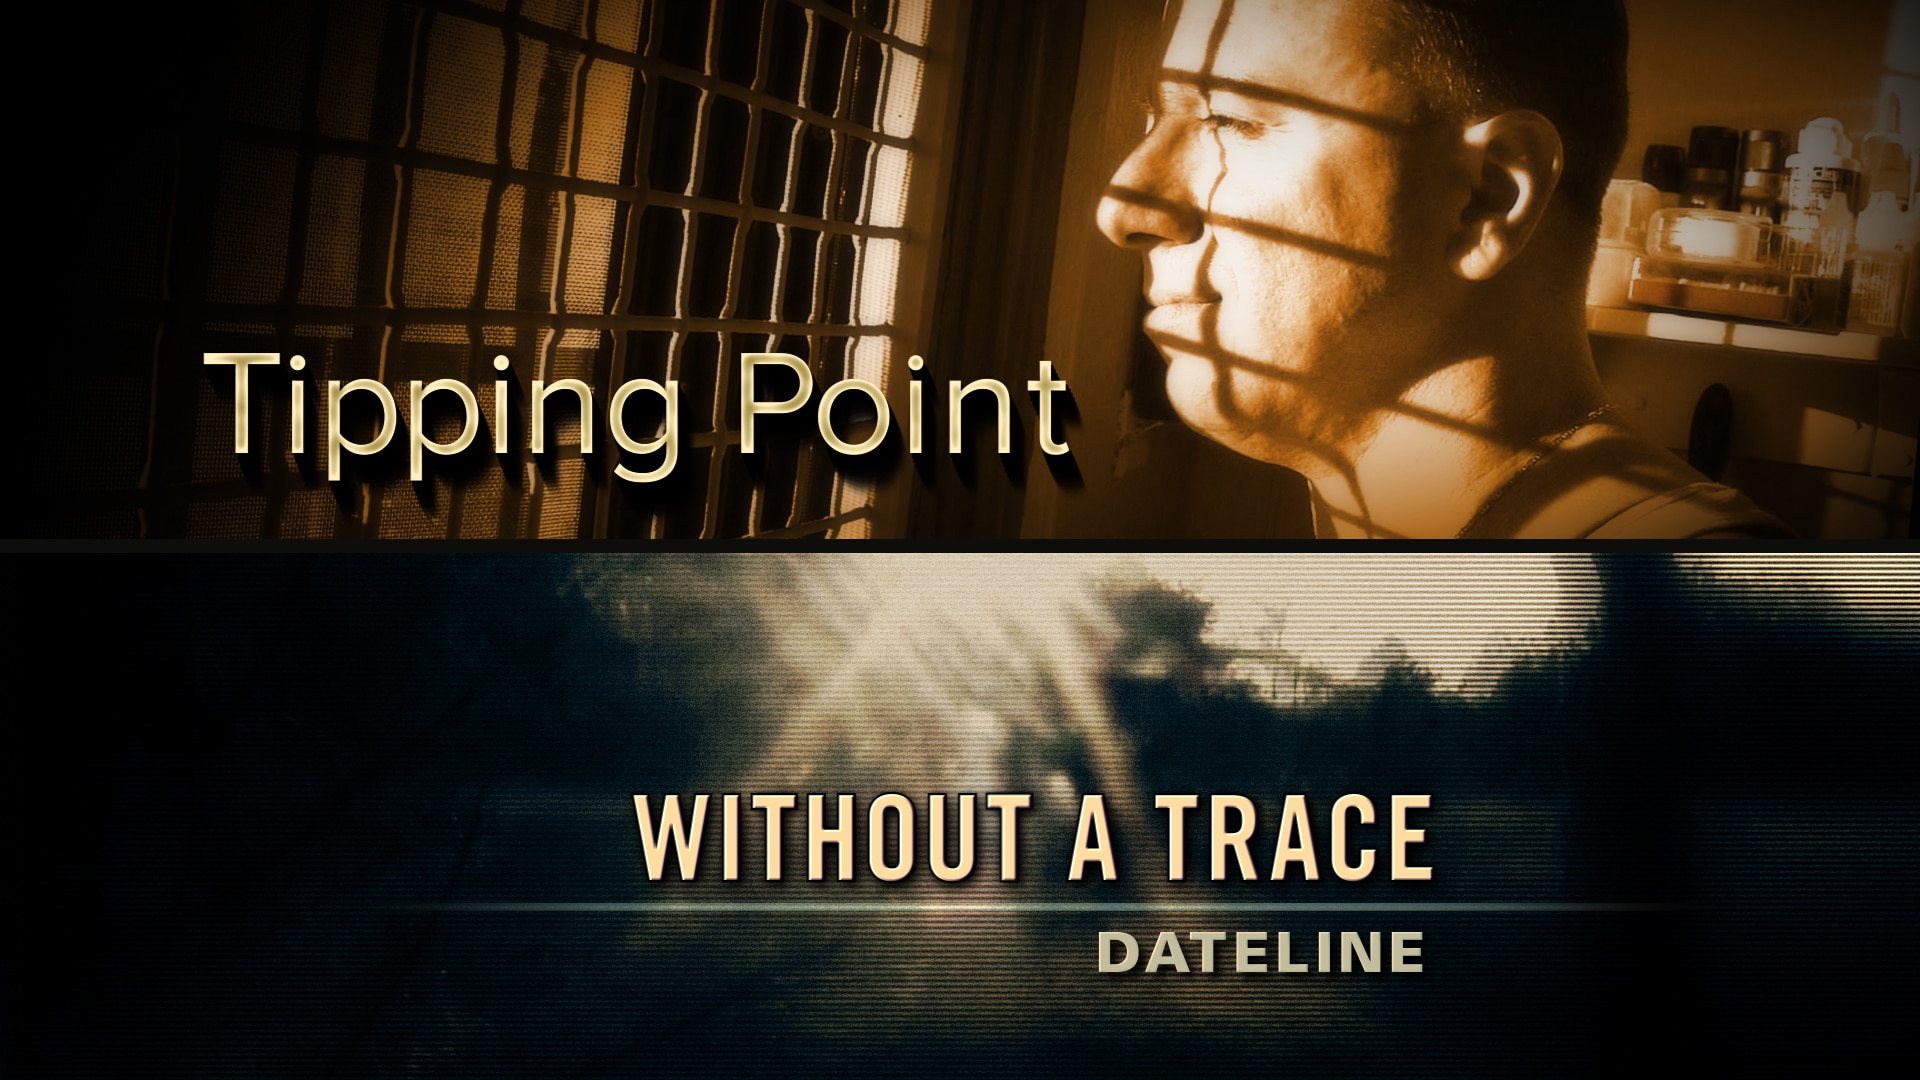 Watch Dateline Episode: Dateline - October 23, 2015 - NBC.com